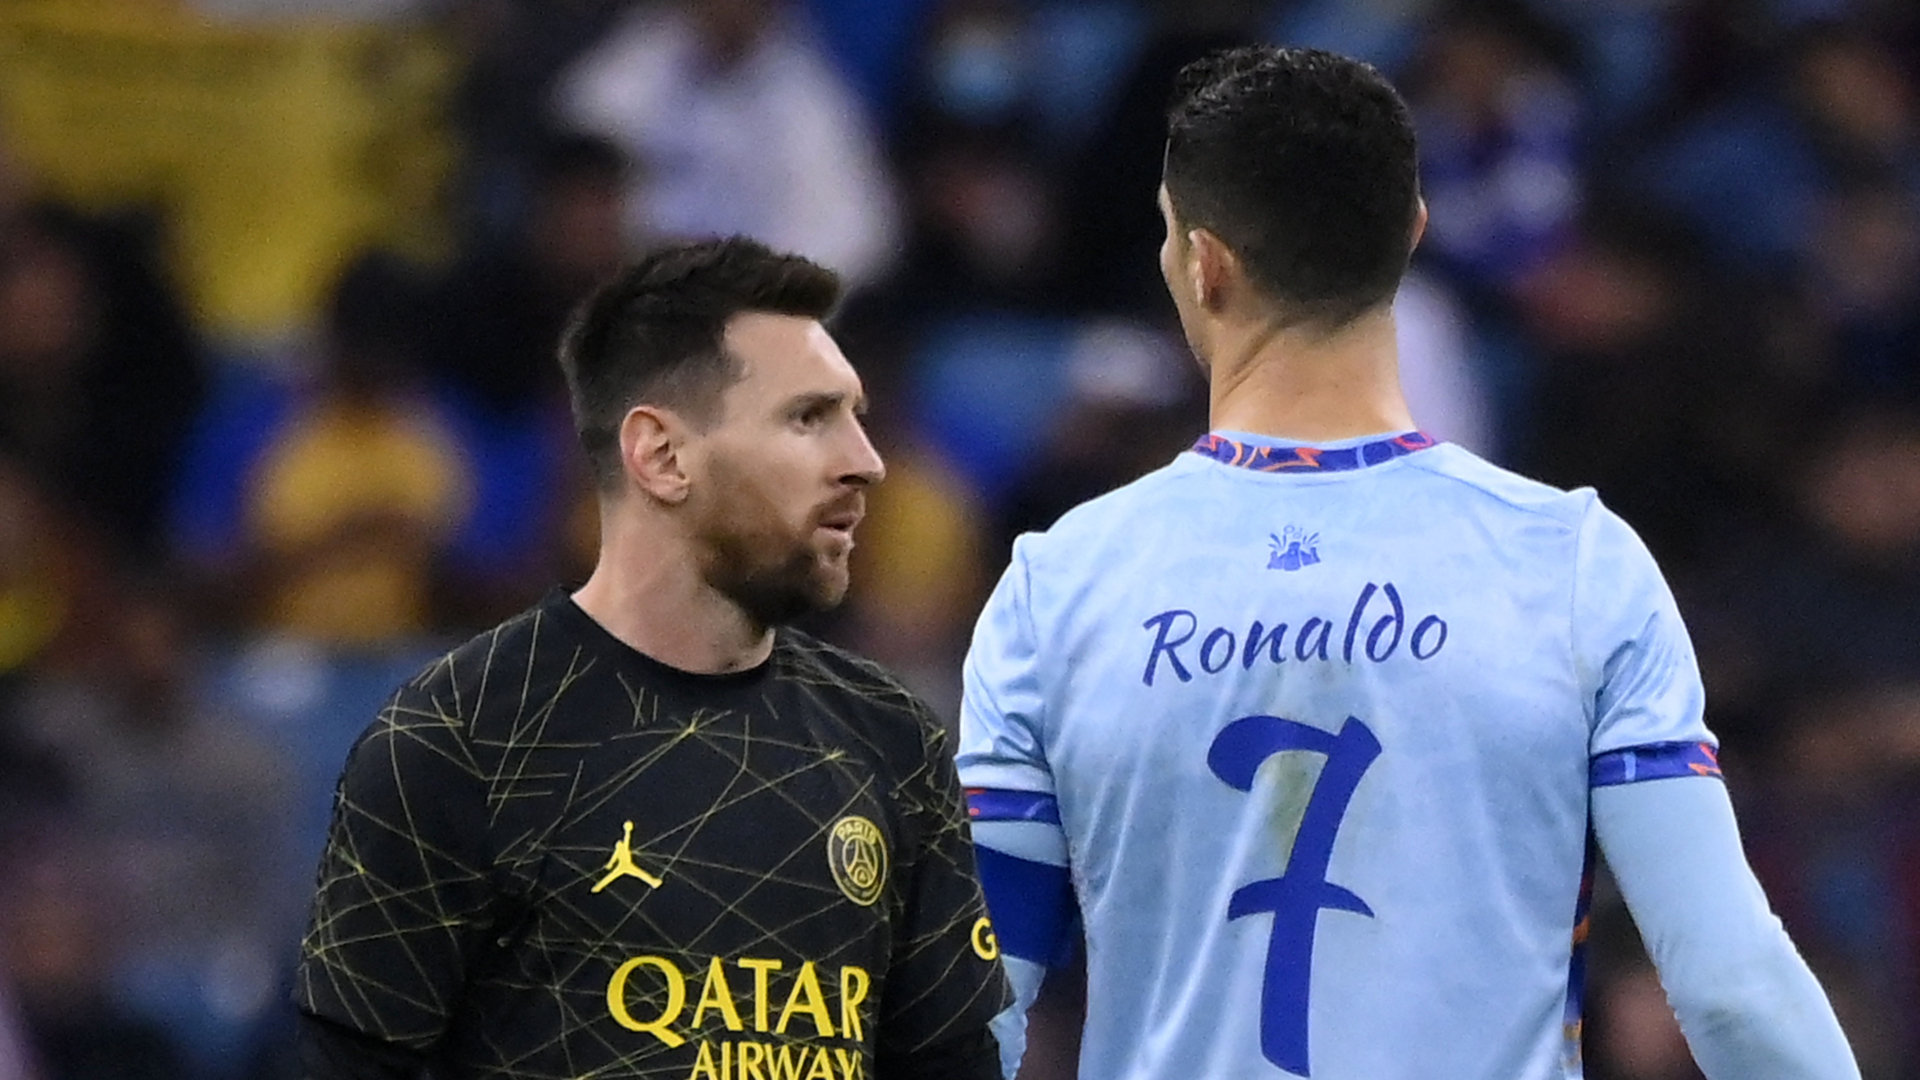 Ronaldo and Messi reunite in blockbuster showdown in Qatar but was it their  last meeting?